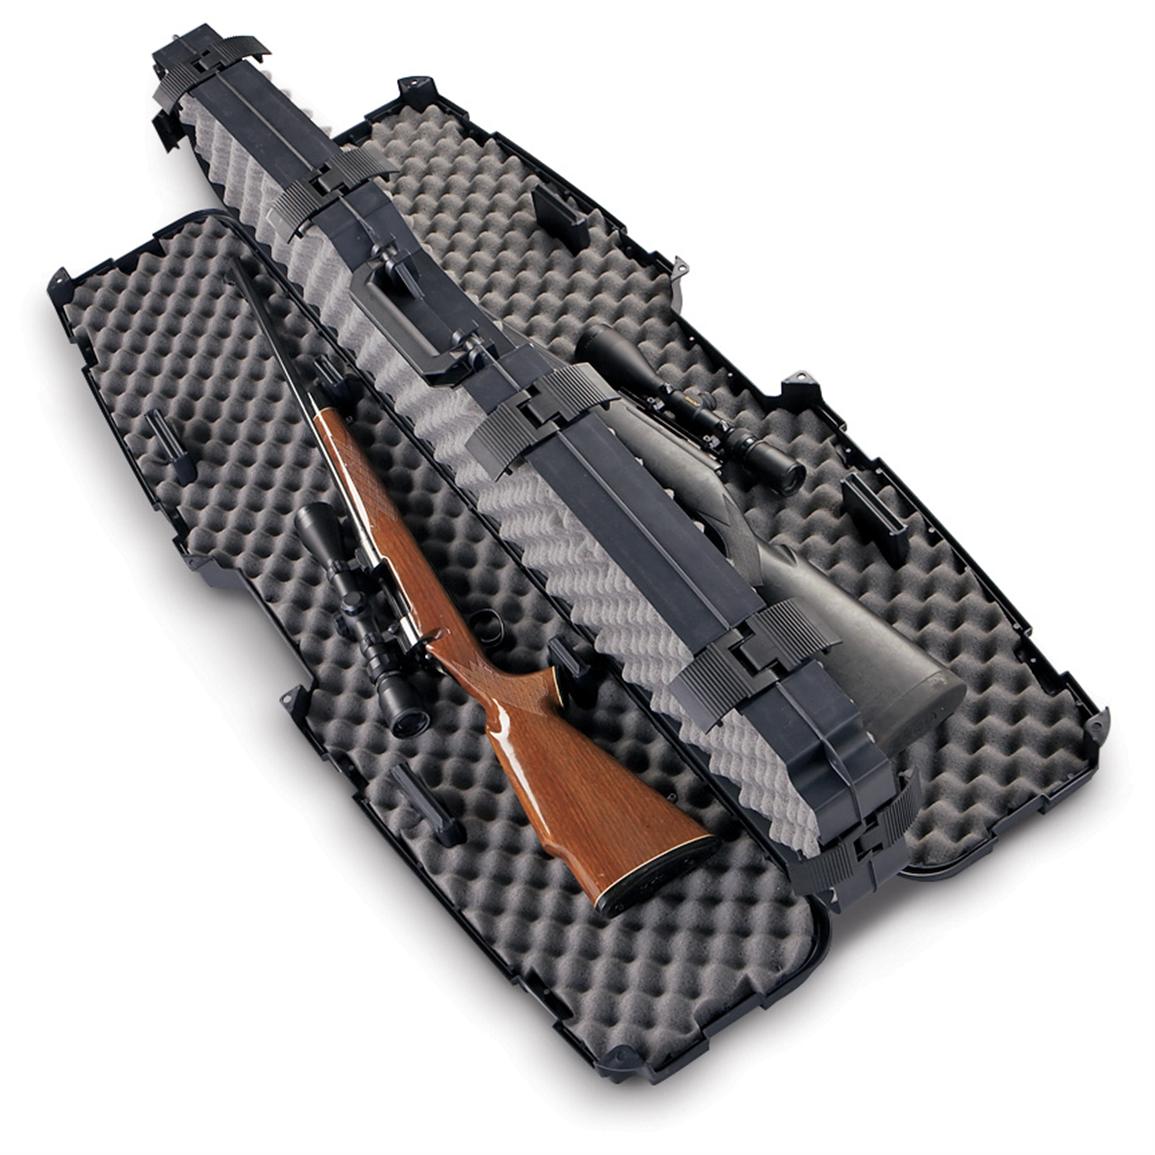 Plano SXS Double Rifle Case, Black